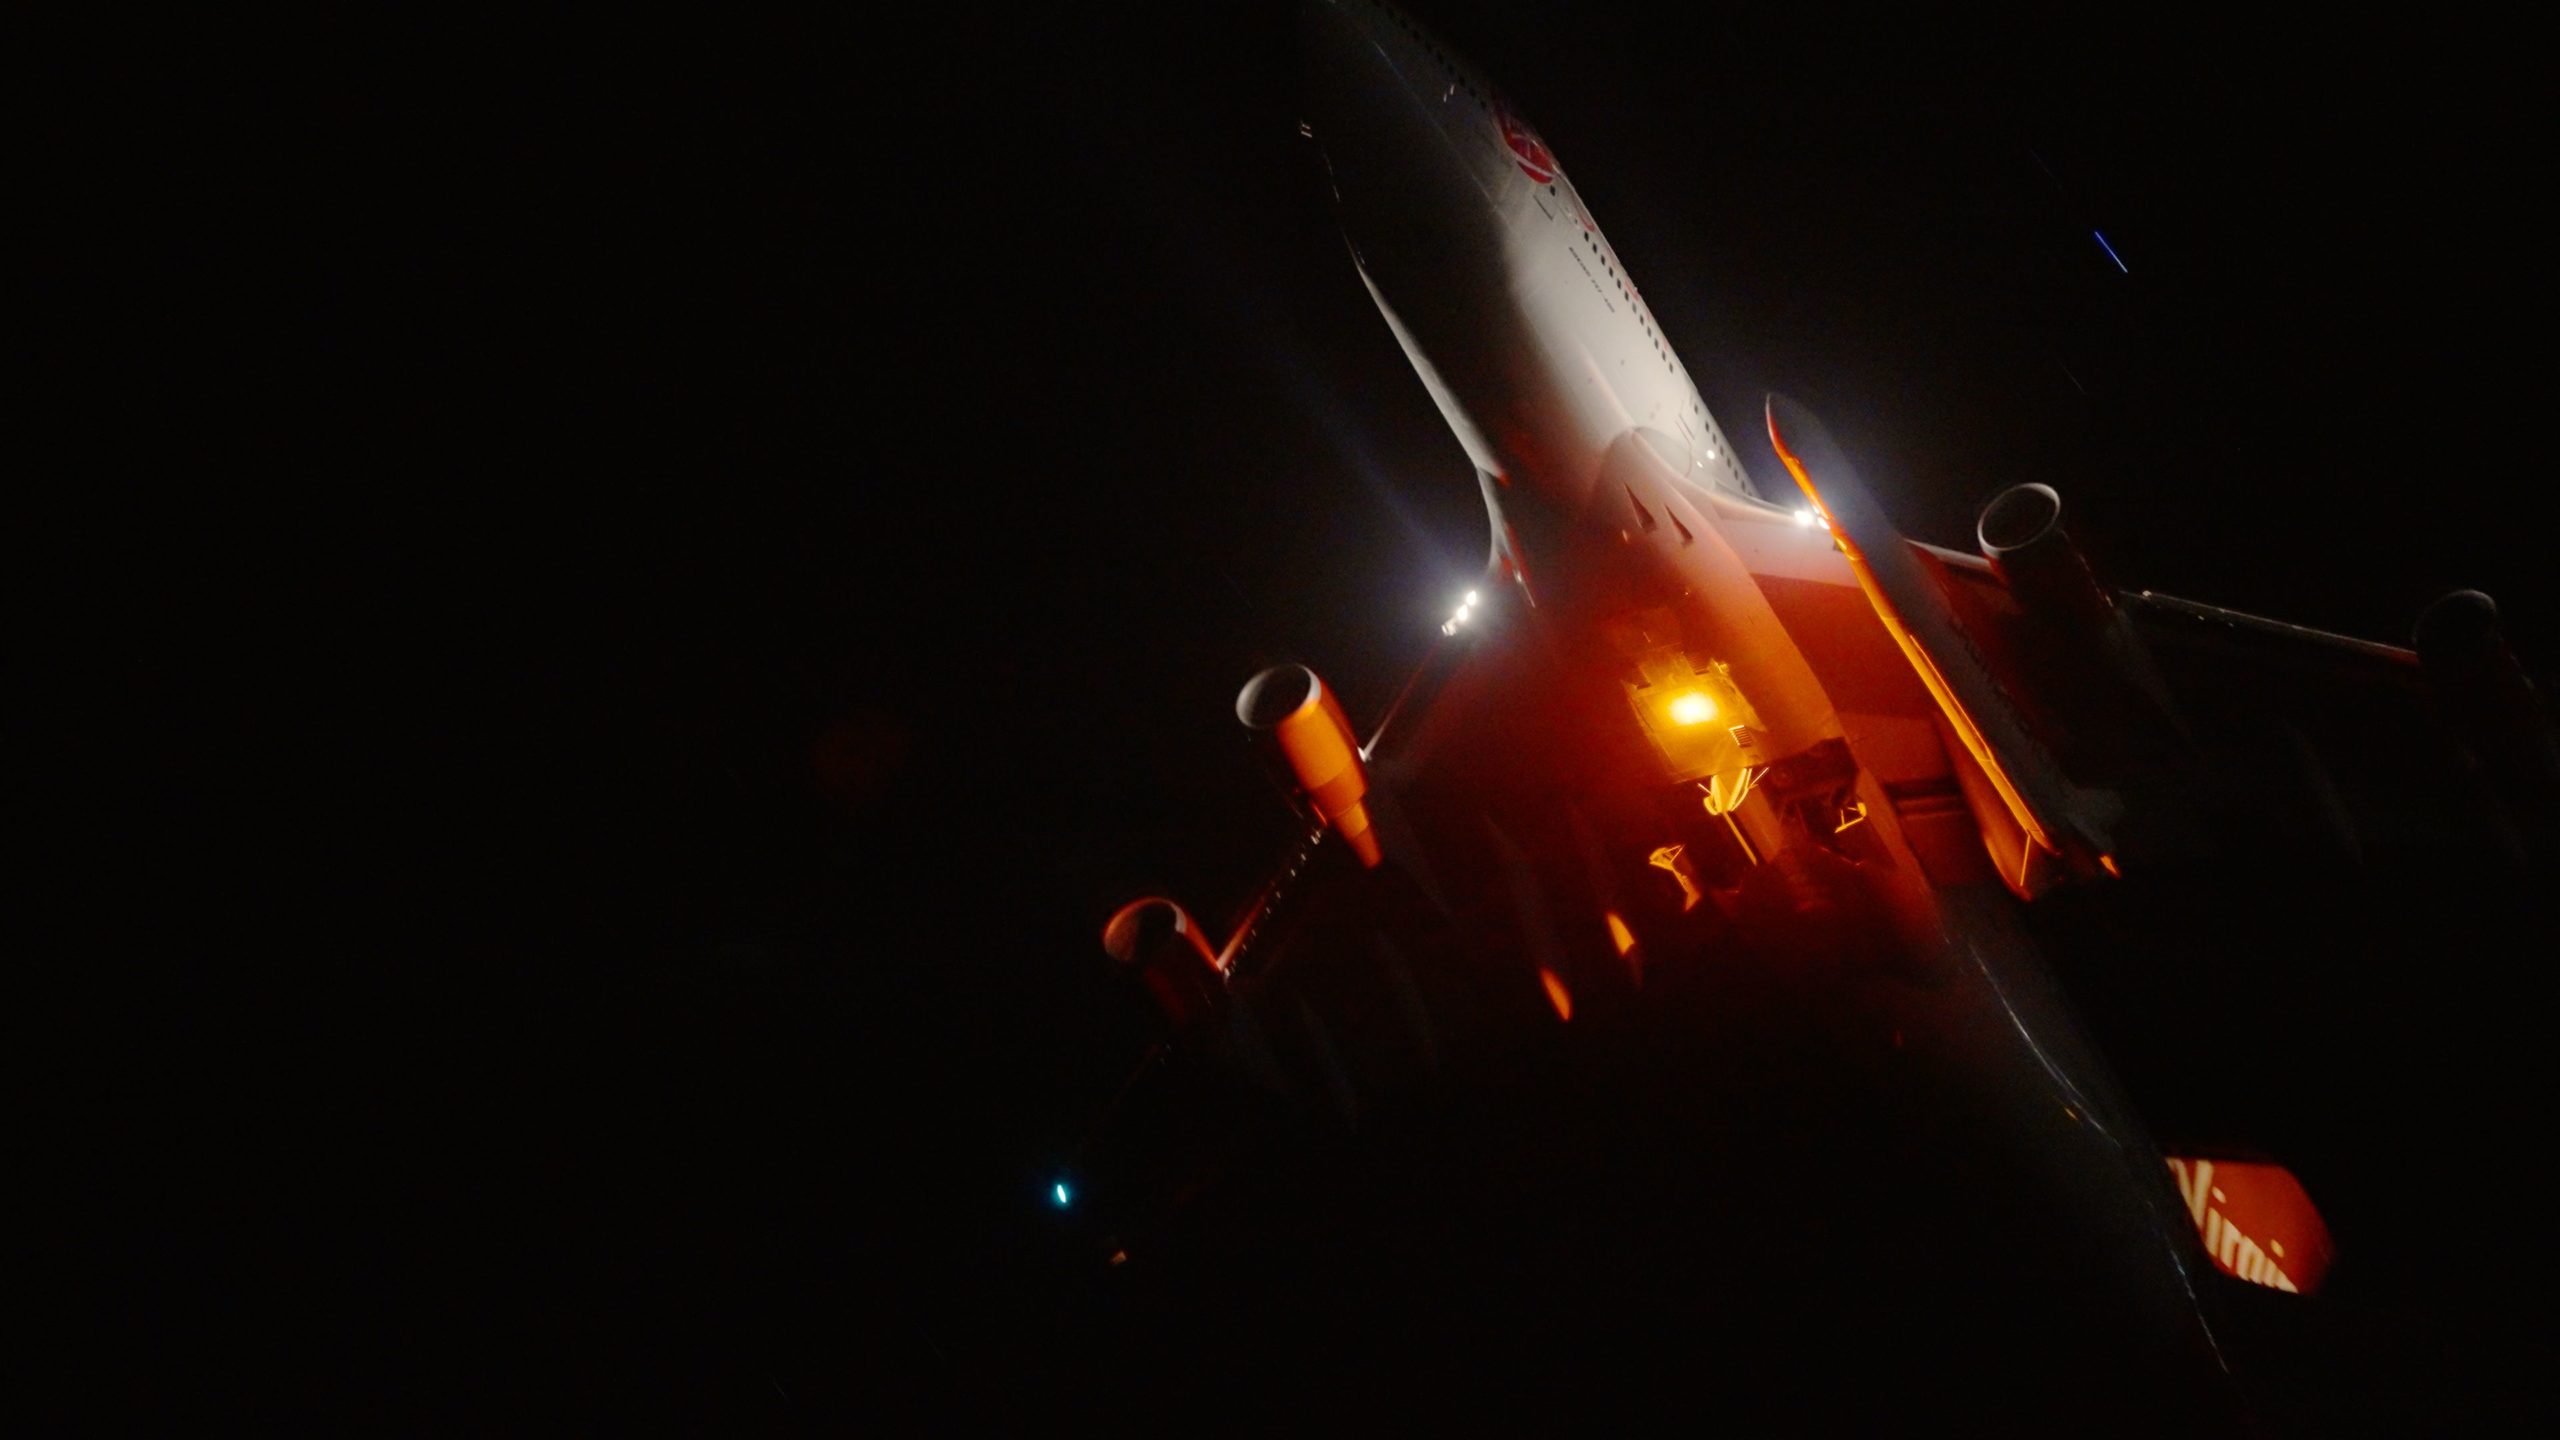 The Virgin Orbit 747 Cosmic Girl lifts off at night.